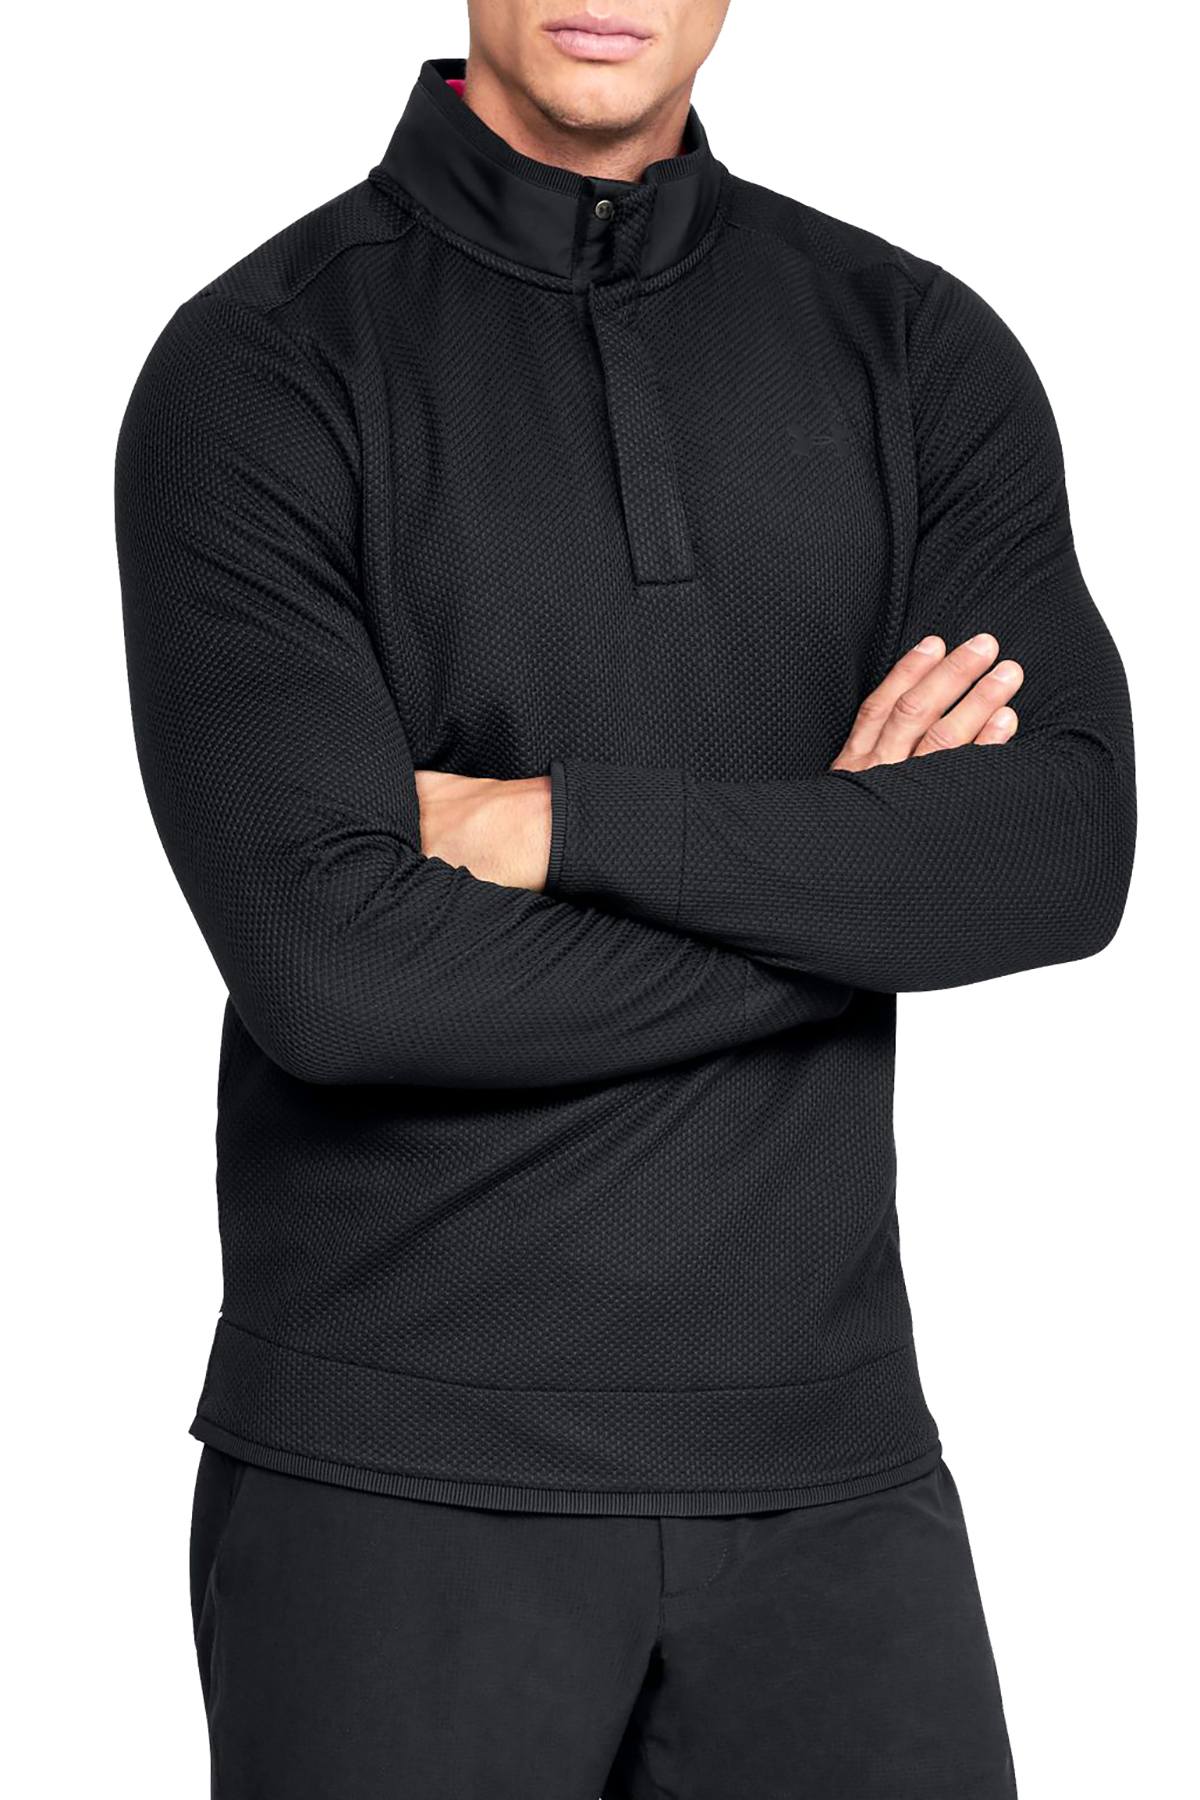 Under Armour Black UA Storm Sweater Fleece Snap Mock Pullover